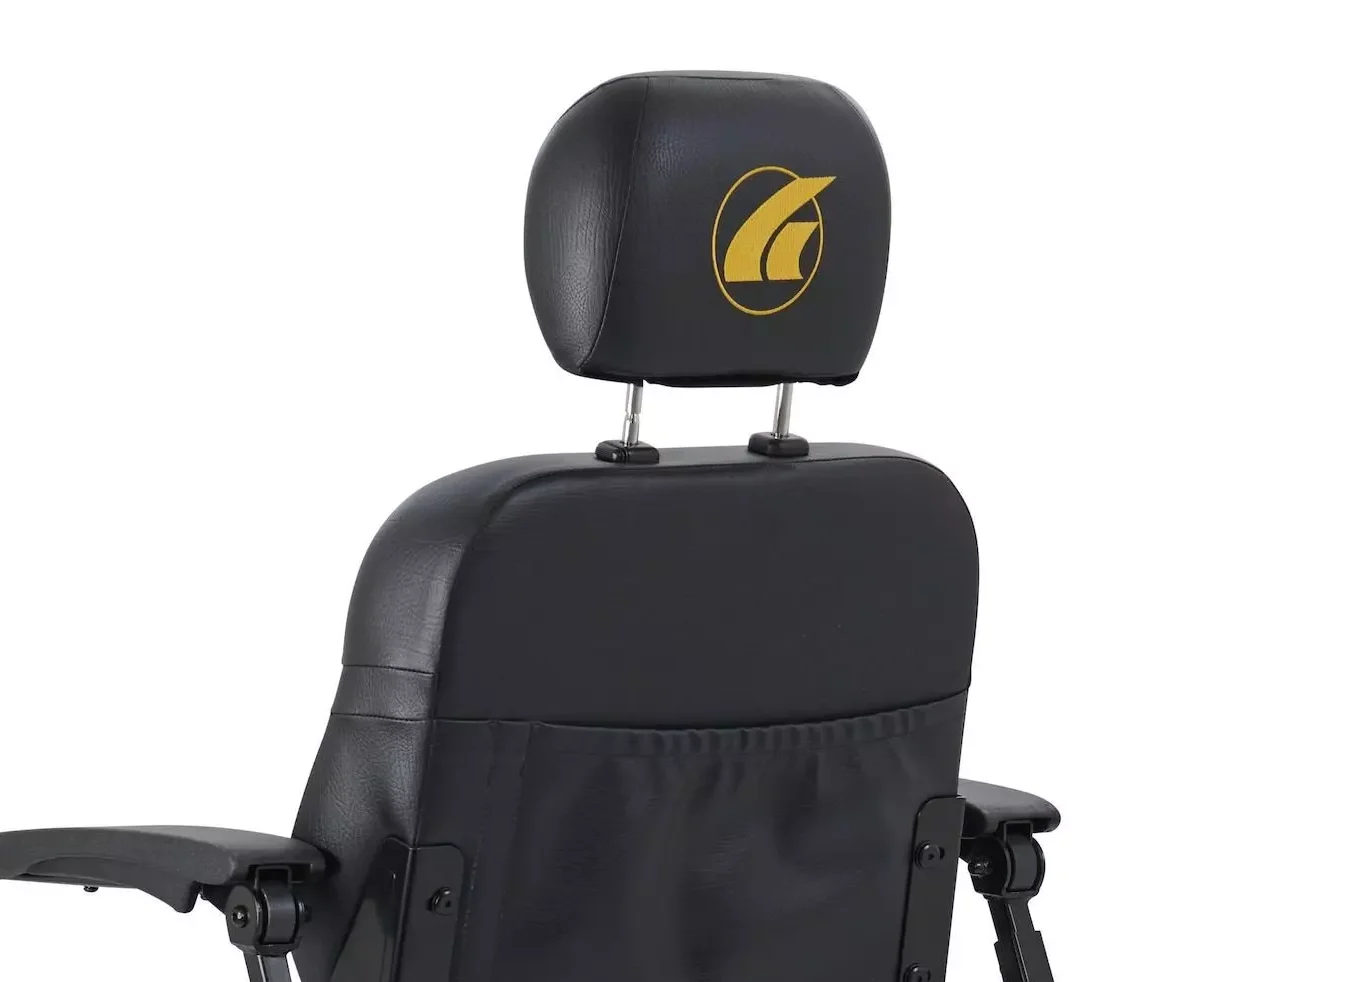 Powerchair adjustable headrest